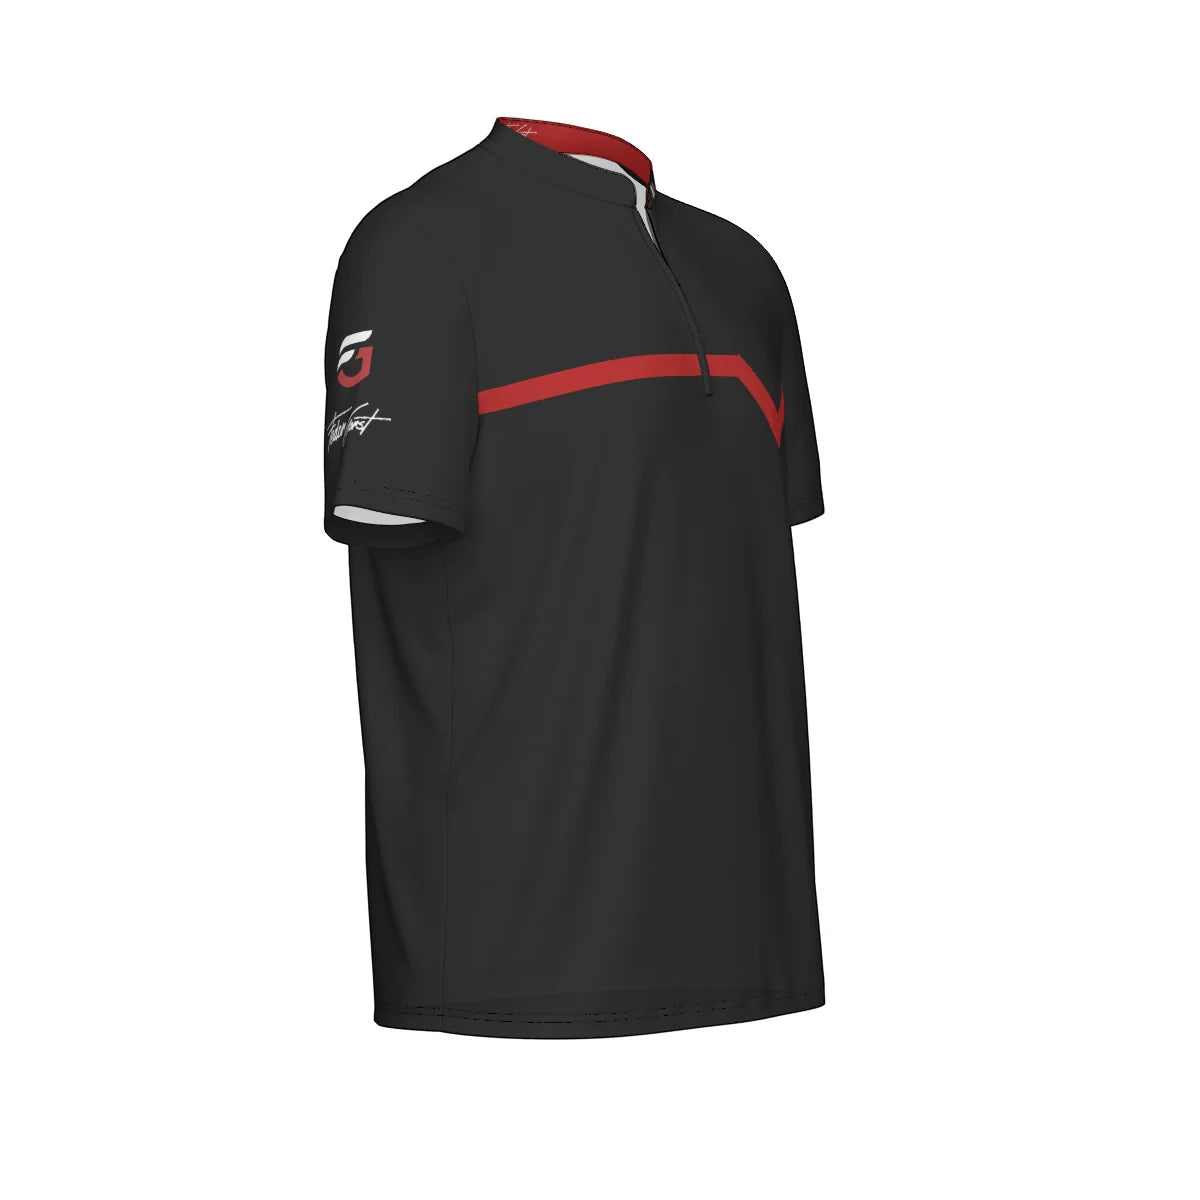 FG x Jam Up Signature Sports Collar Jersey V5: Black/Red